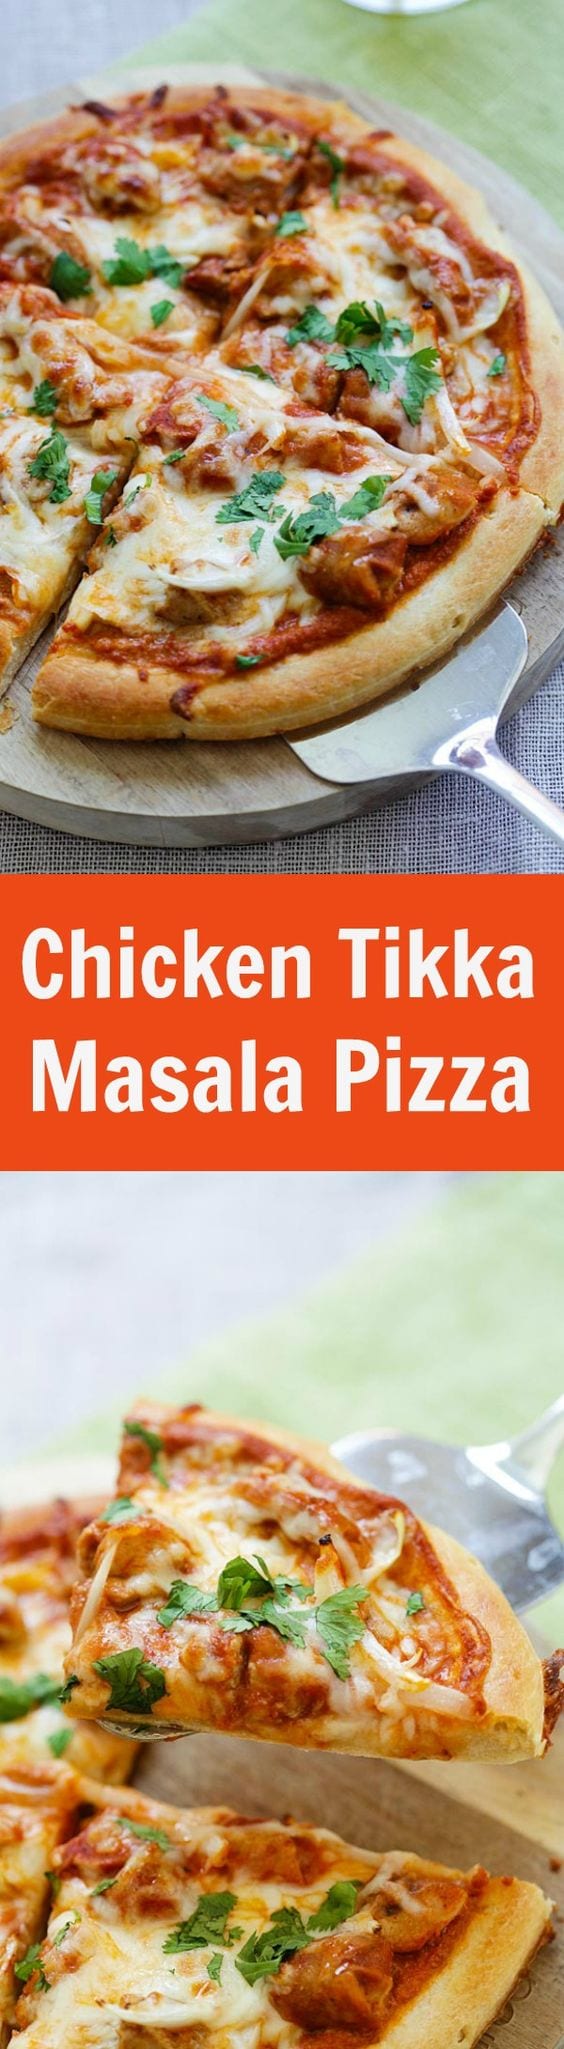 Chicken Tikka Masala Pizza - cheesy pizza topped with delicious Indian chicken tikka masala. The best homemade pizza recipe ever | rasamalaysia.com